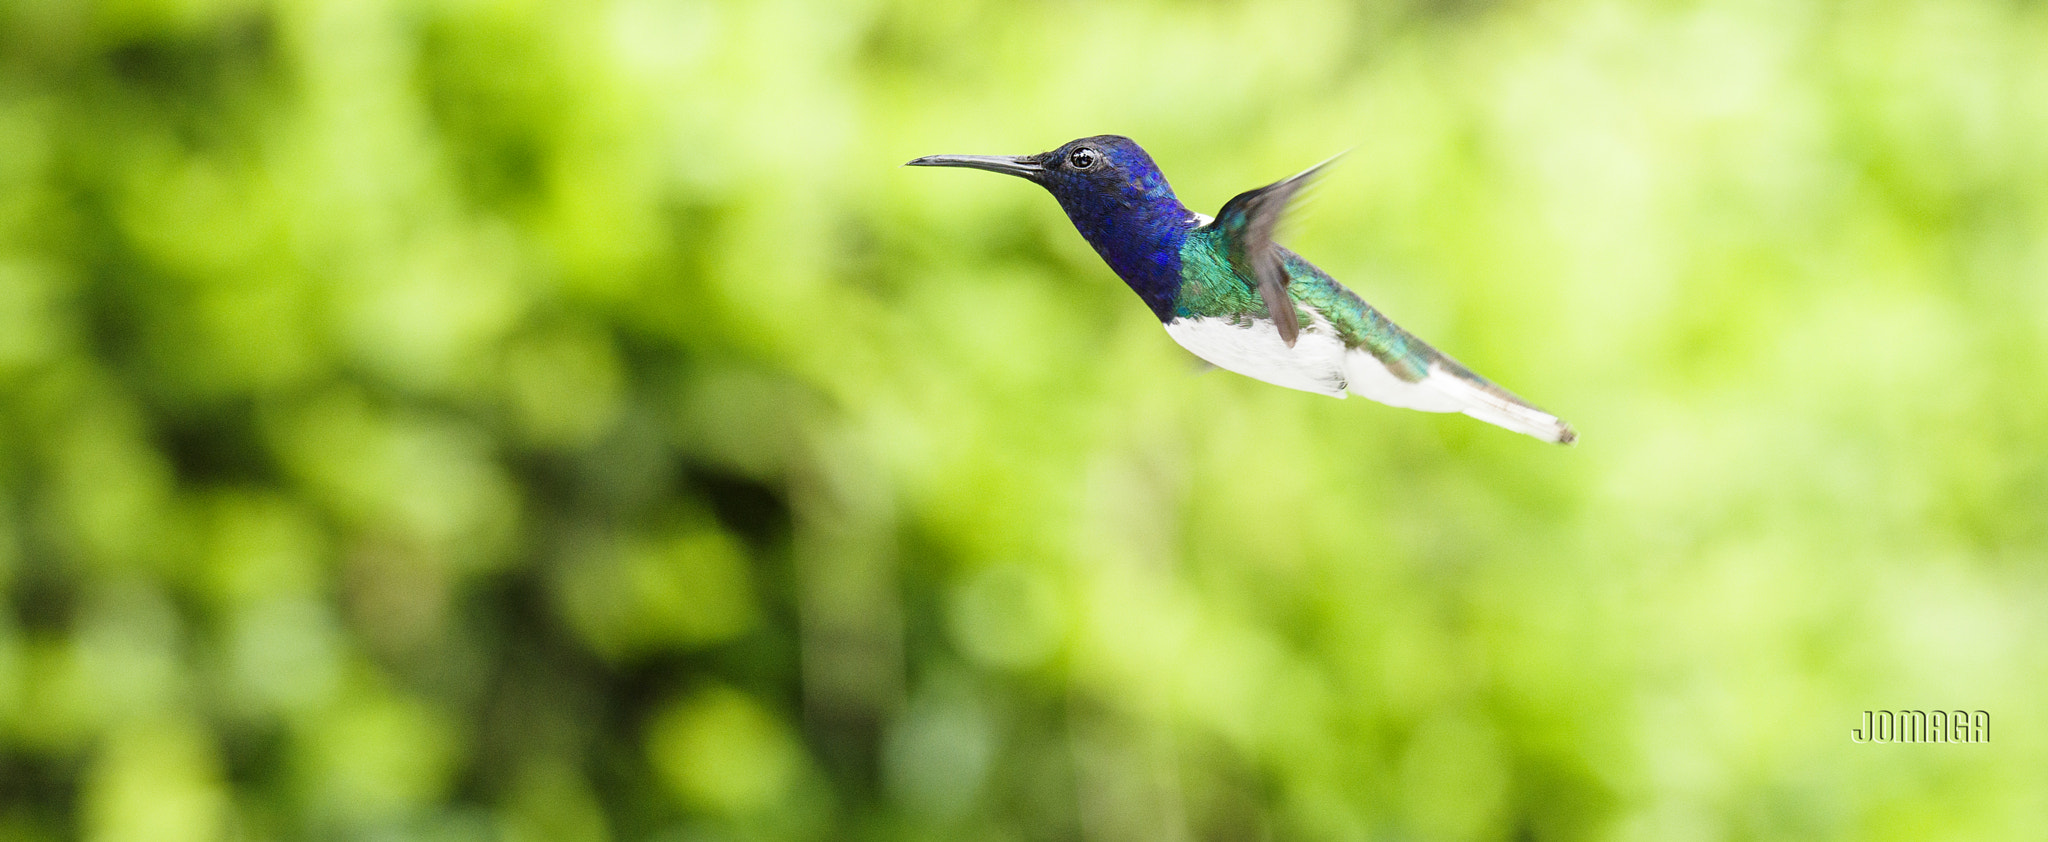 Pentax K-1 sample photo. Hummingbird in yotoco #colombia photography